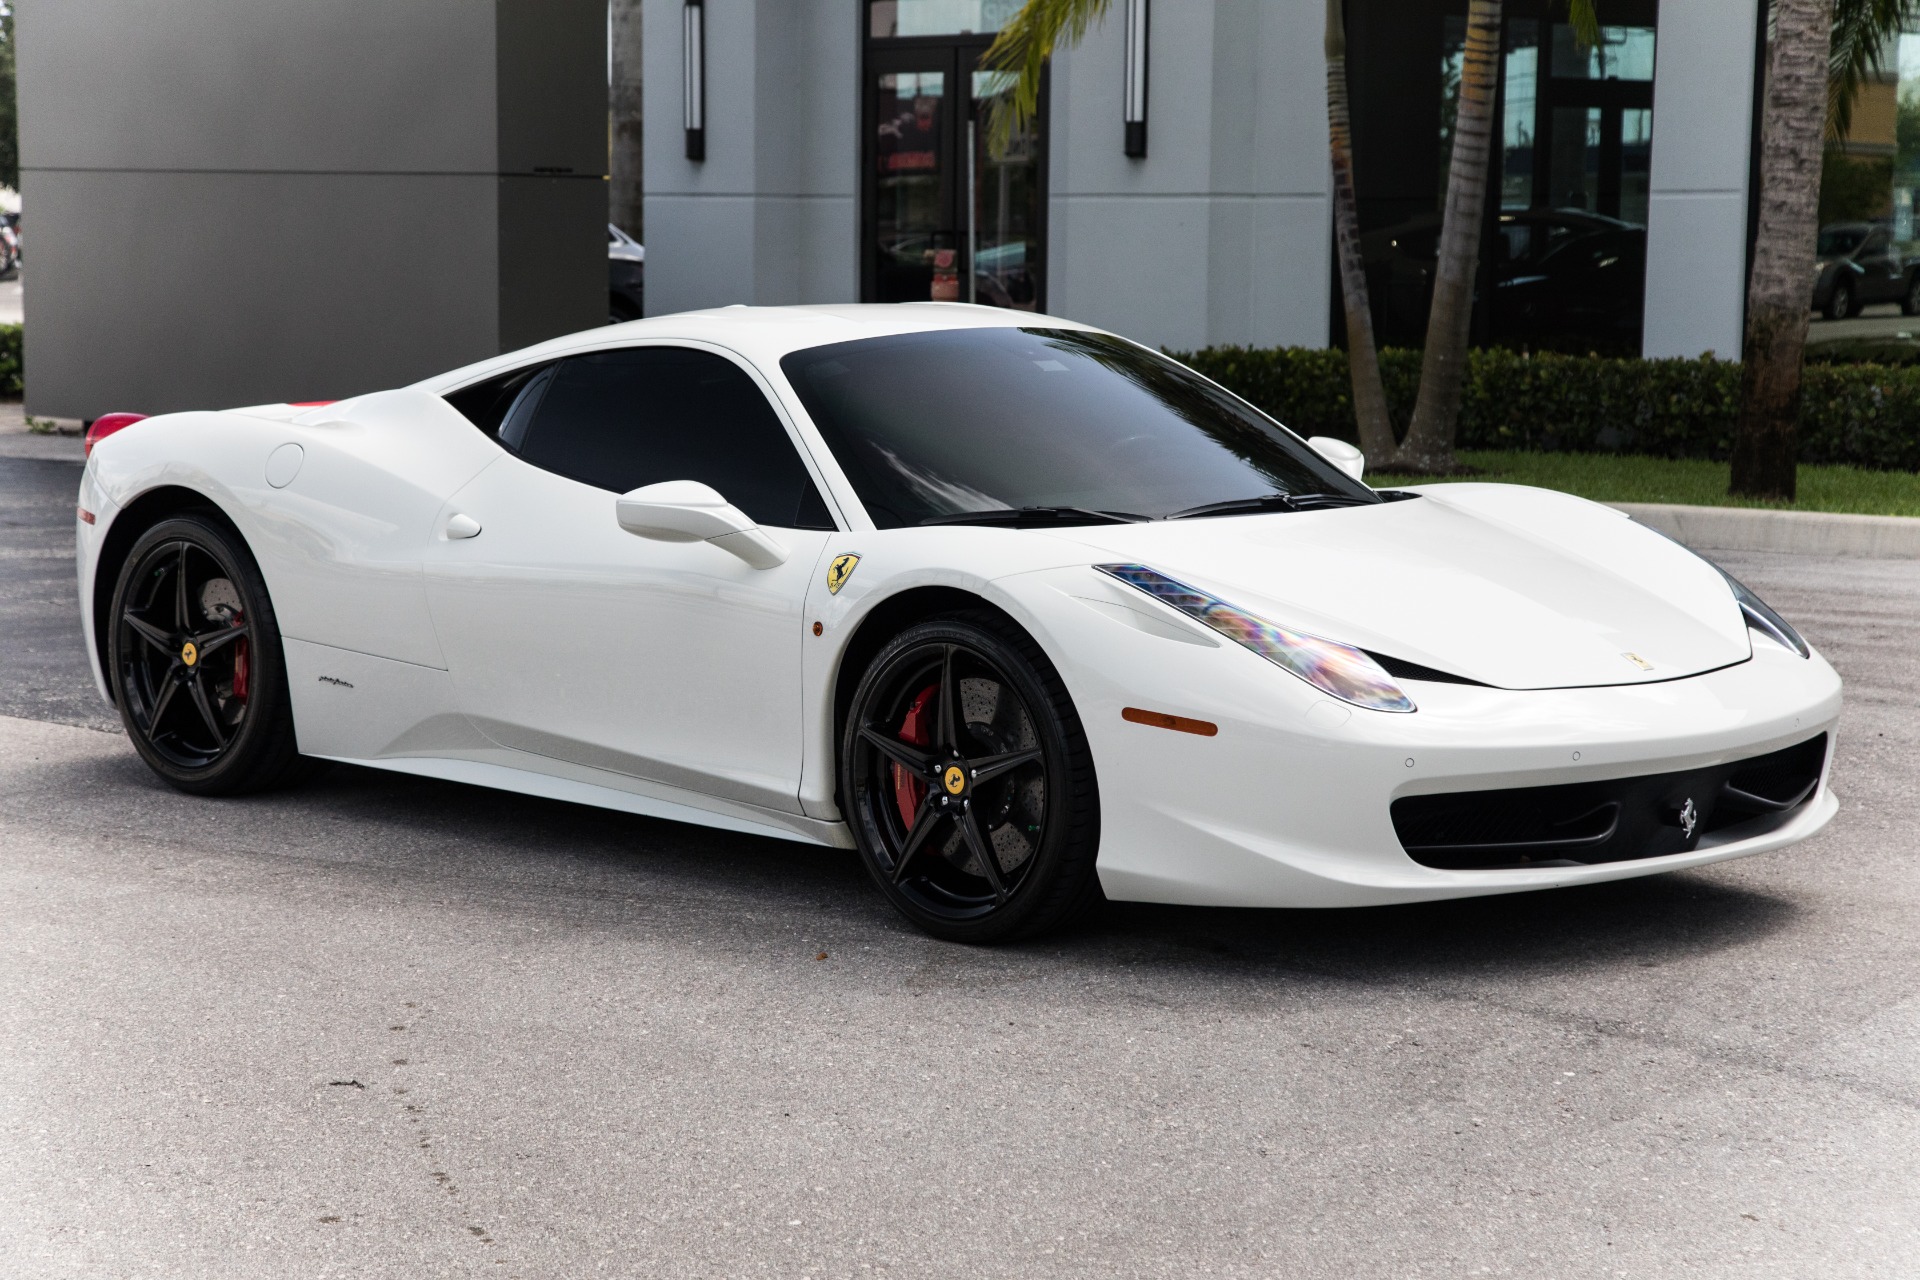 Used 2014 Ferrari 458 Italia For Sale ($177,900) | Marino Performance ...